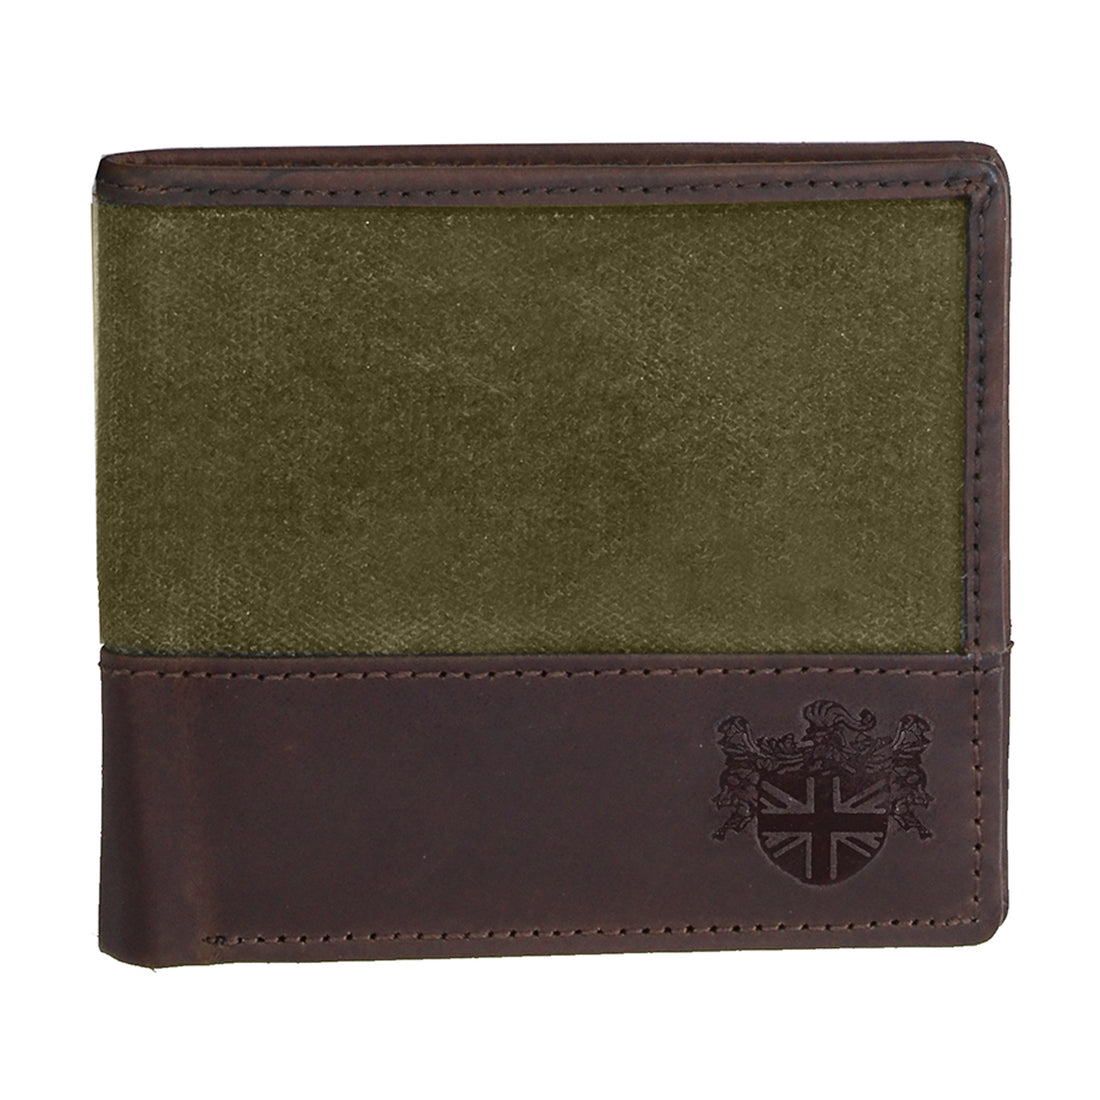 British Bag Co. Green Wax Canvas Wallet